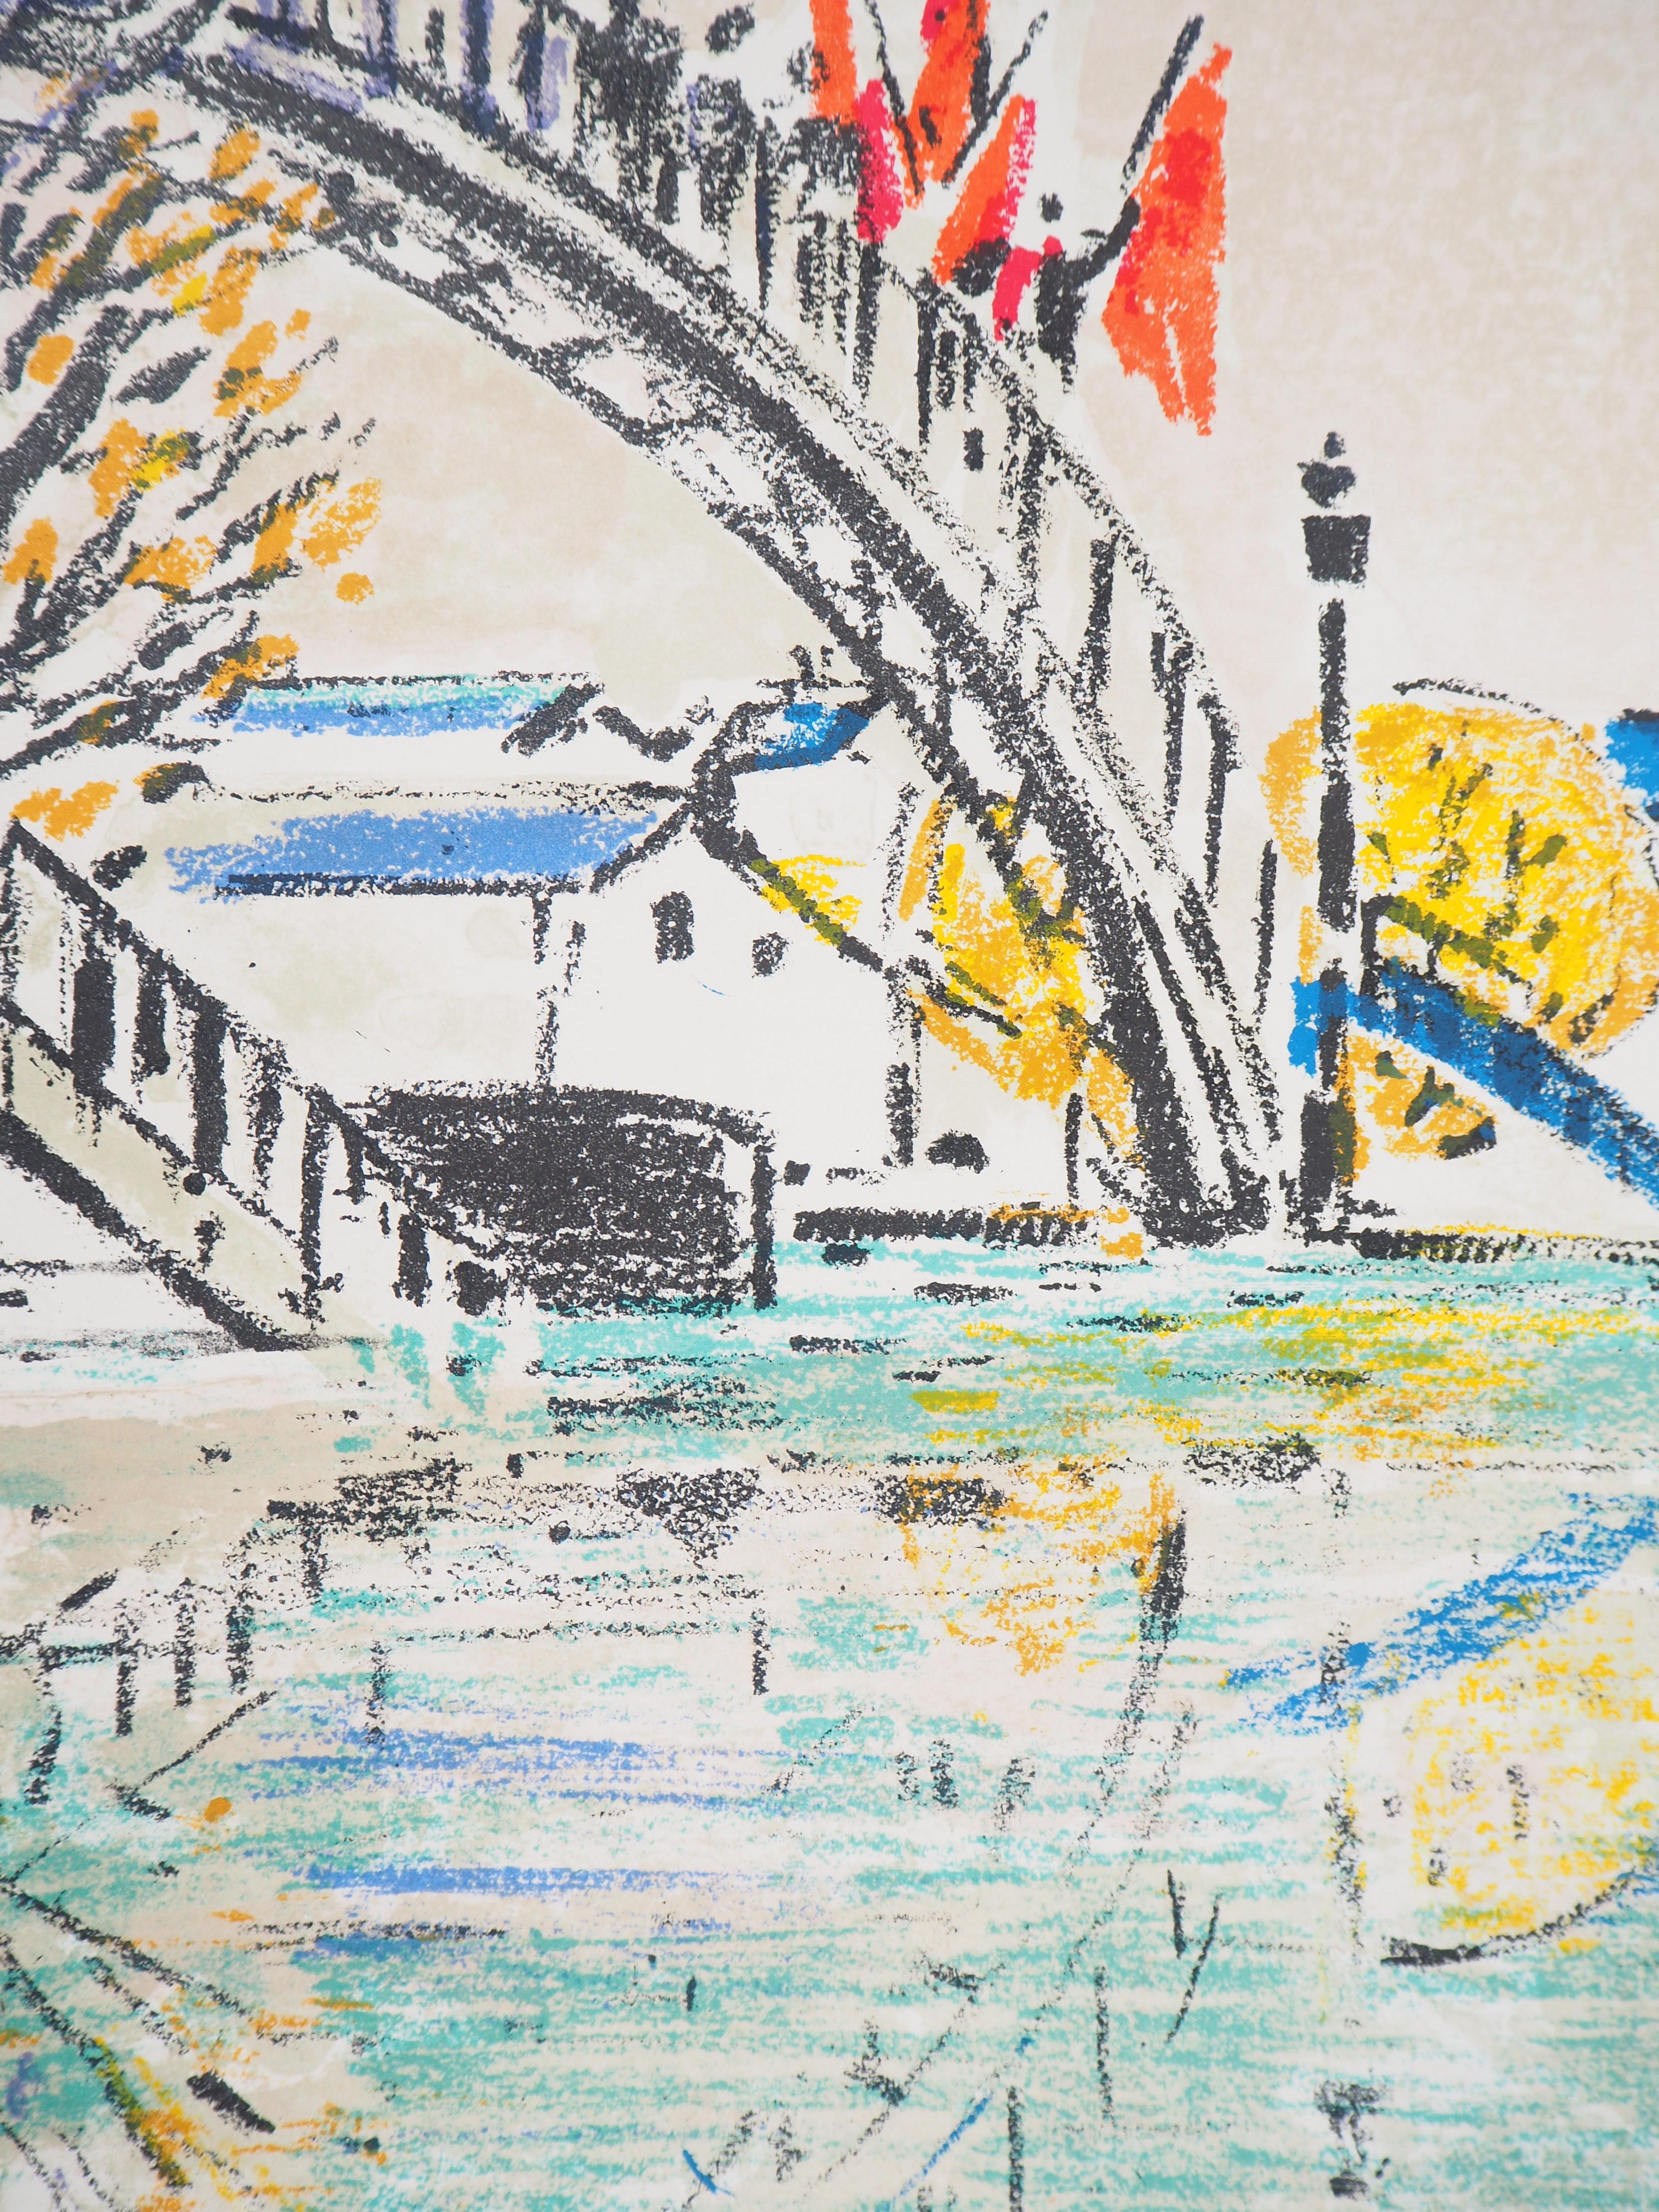 Paris : Bridge over Canal Saint Martin - Original Lithograph, Handsigned - Modern Print by Robert Savary